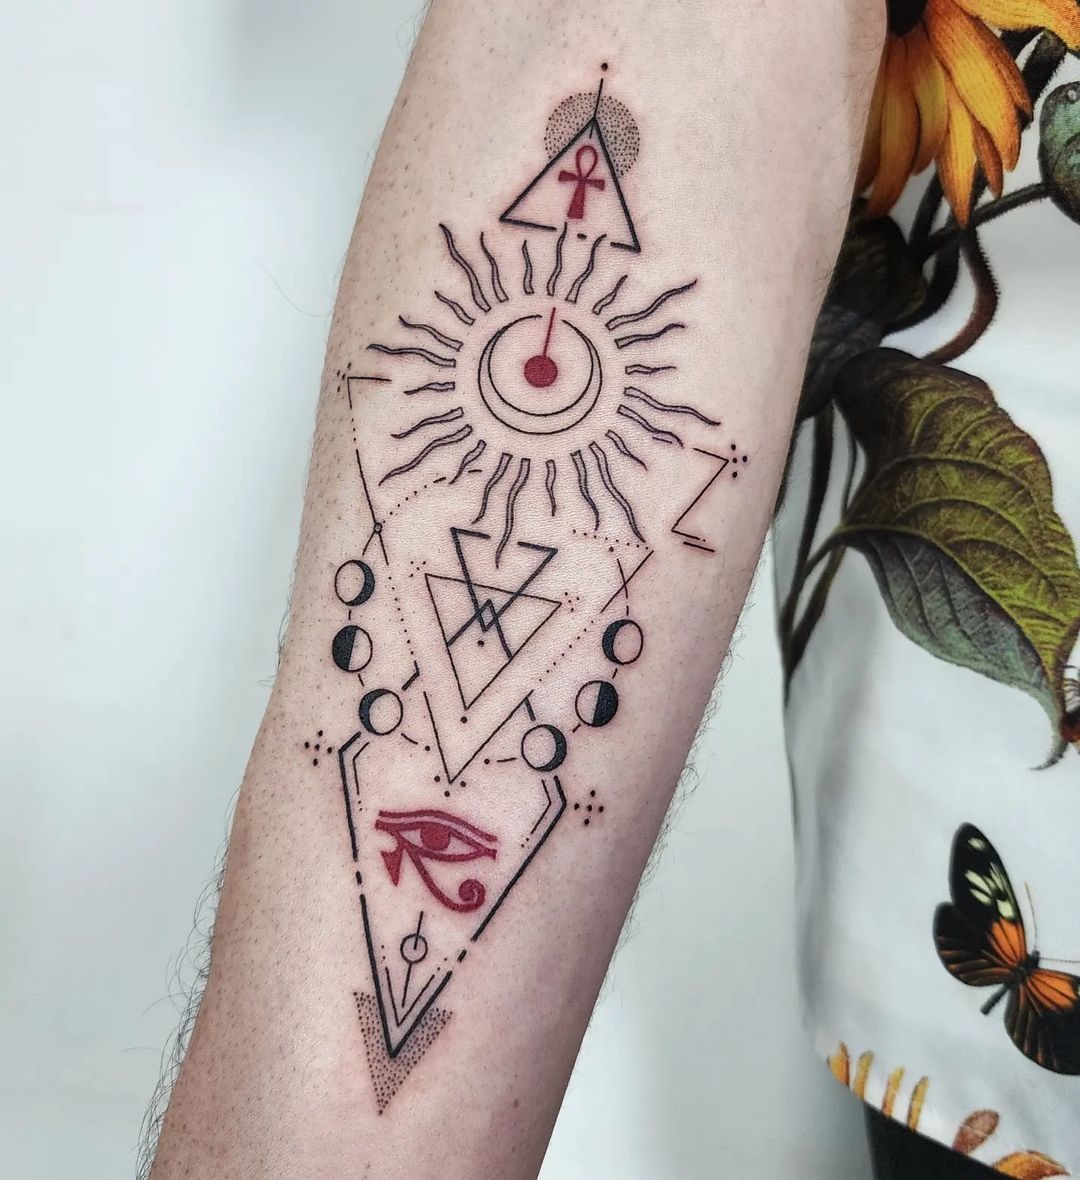 4 elements tattoo by Osakadows on DeviantArt